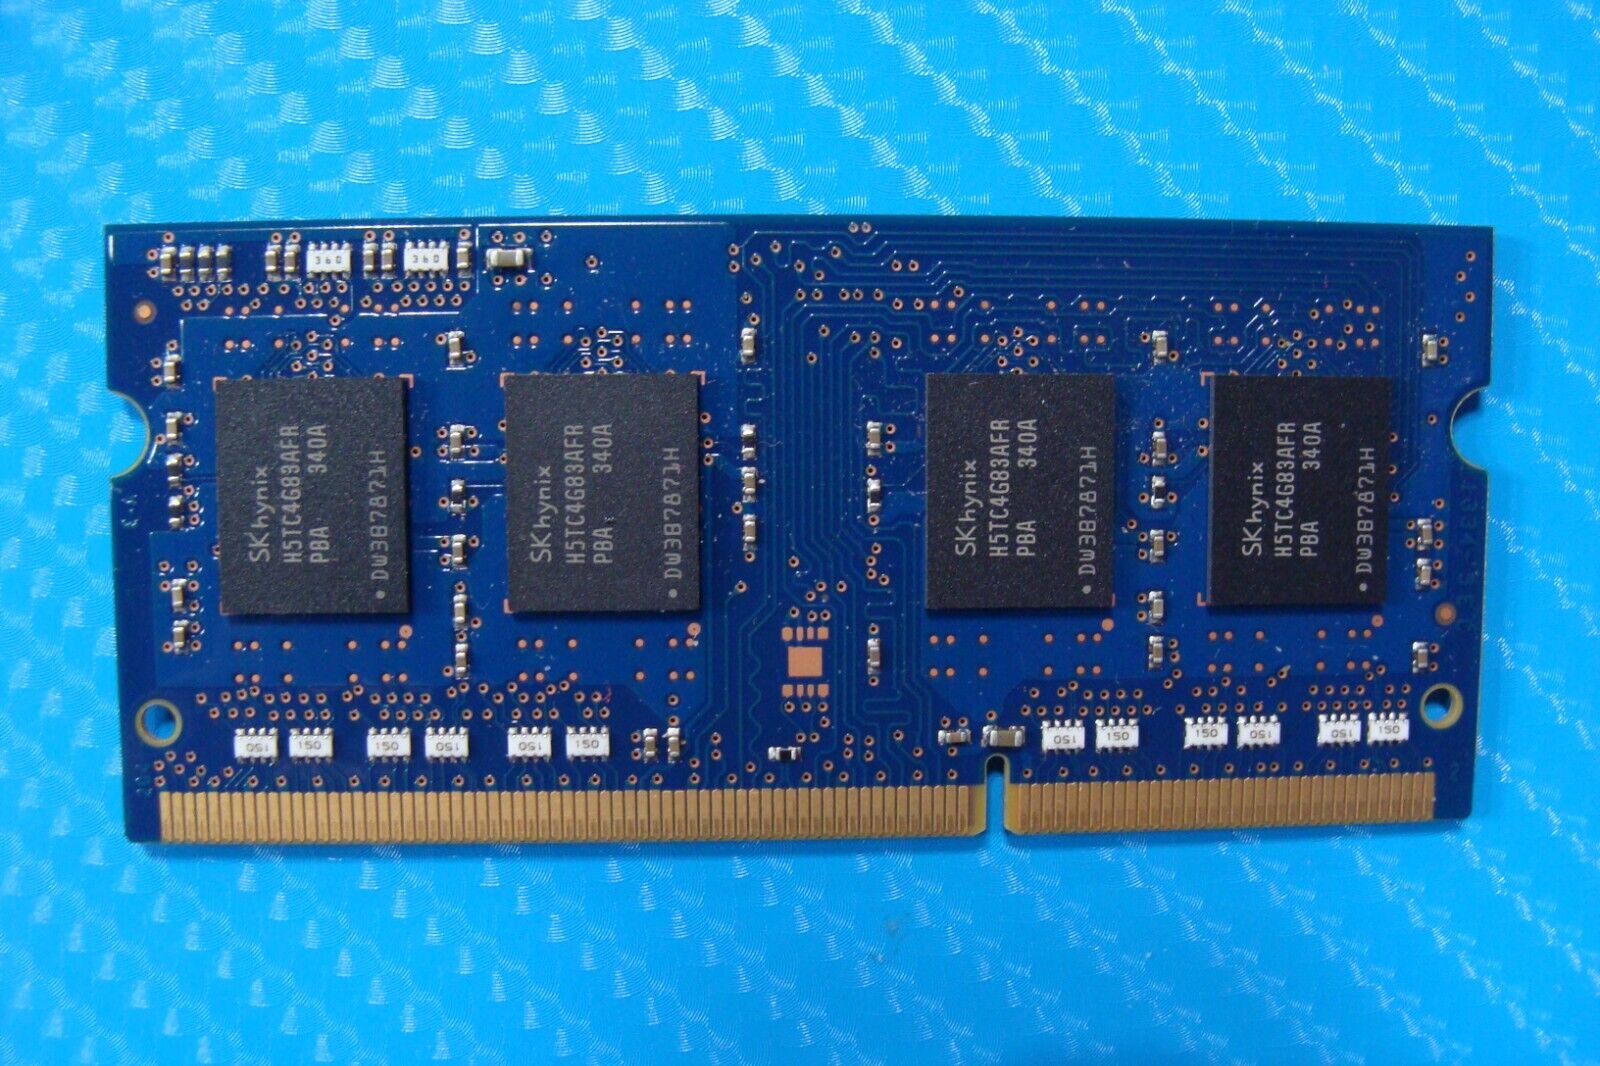 Dell 17R-5721 SK Hynix 4GB 1Rx8 PC3L-12800S Memory RAM SO-DIMM HMT451S6AFR8A-PB